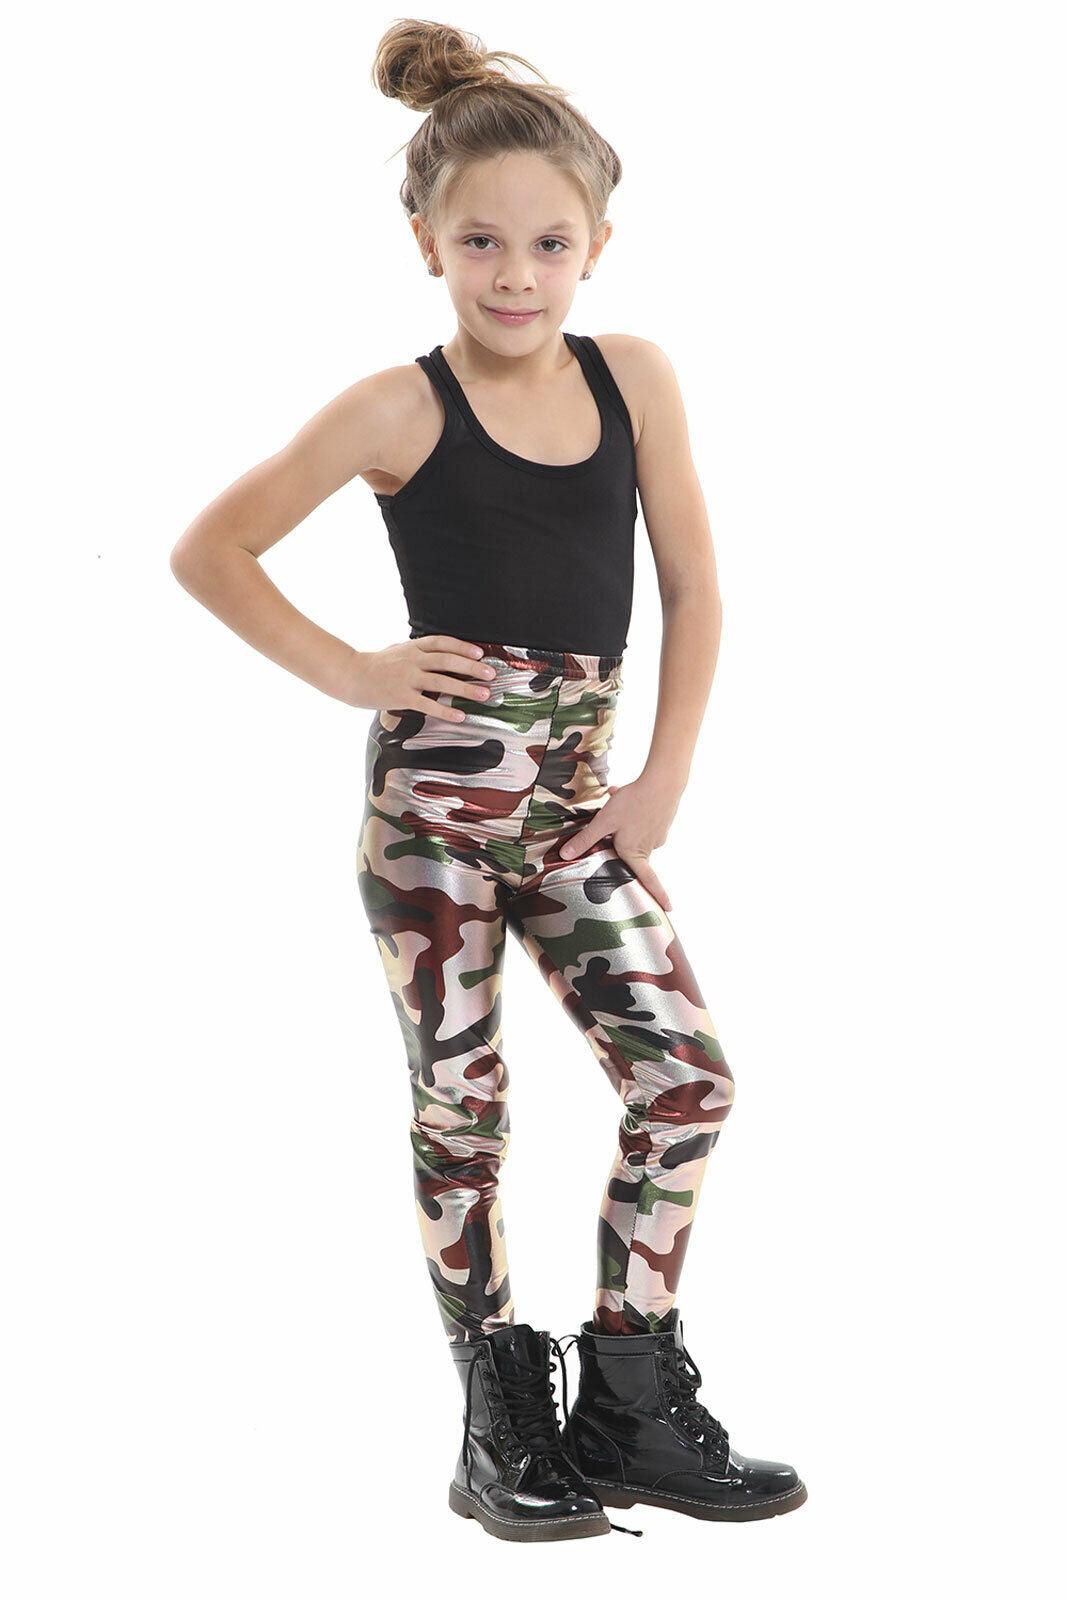 Kids Girls Army Camouflage Metallic Shiny Leggings Dancewear Skinny Pants - Labreeze